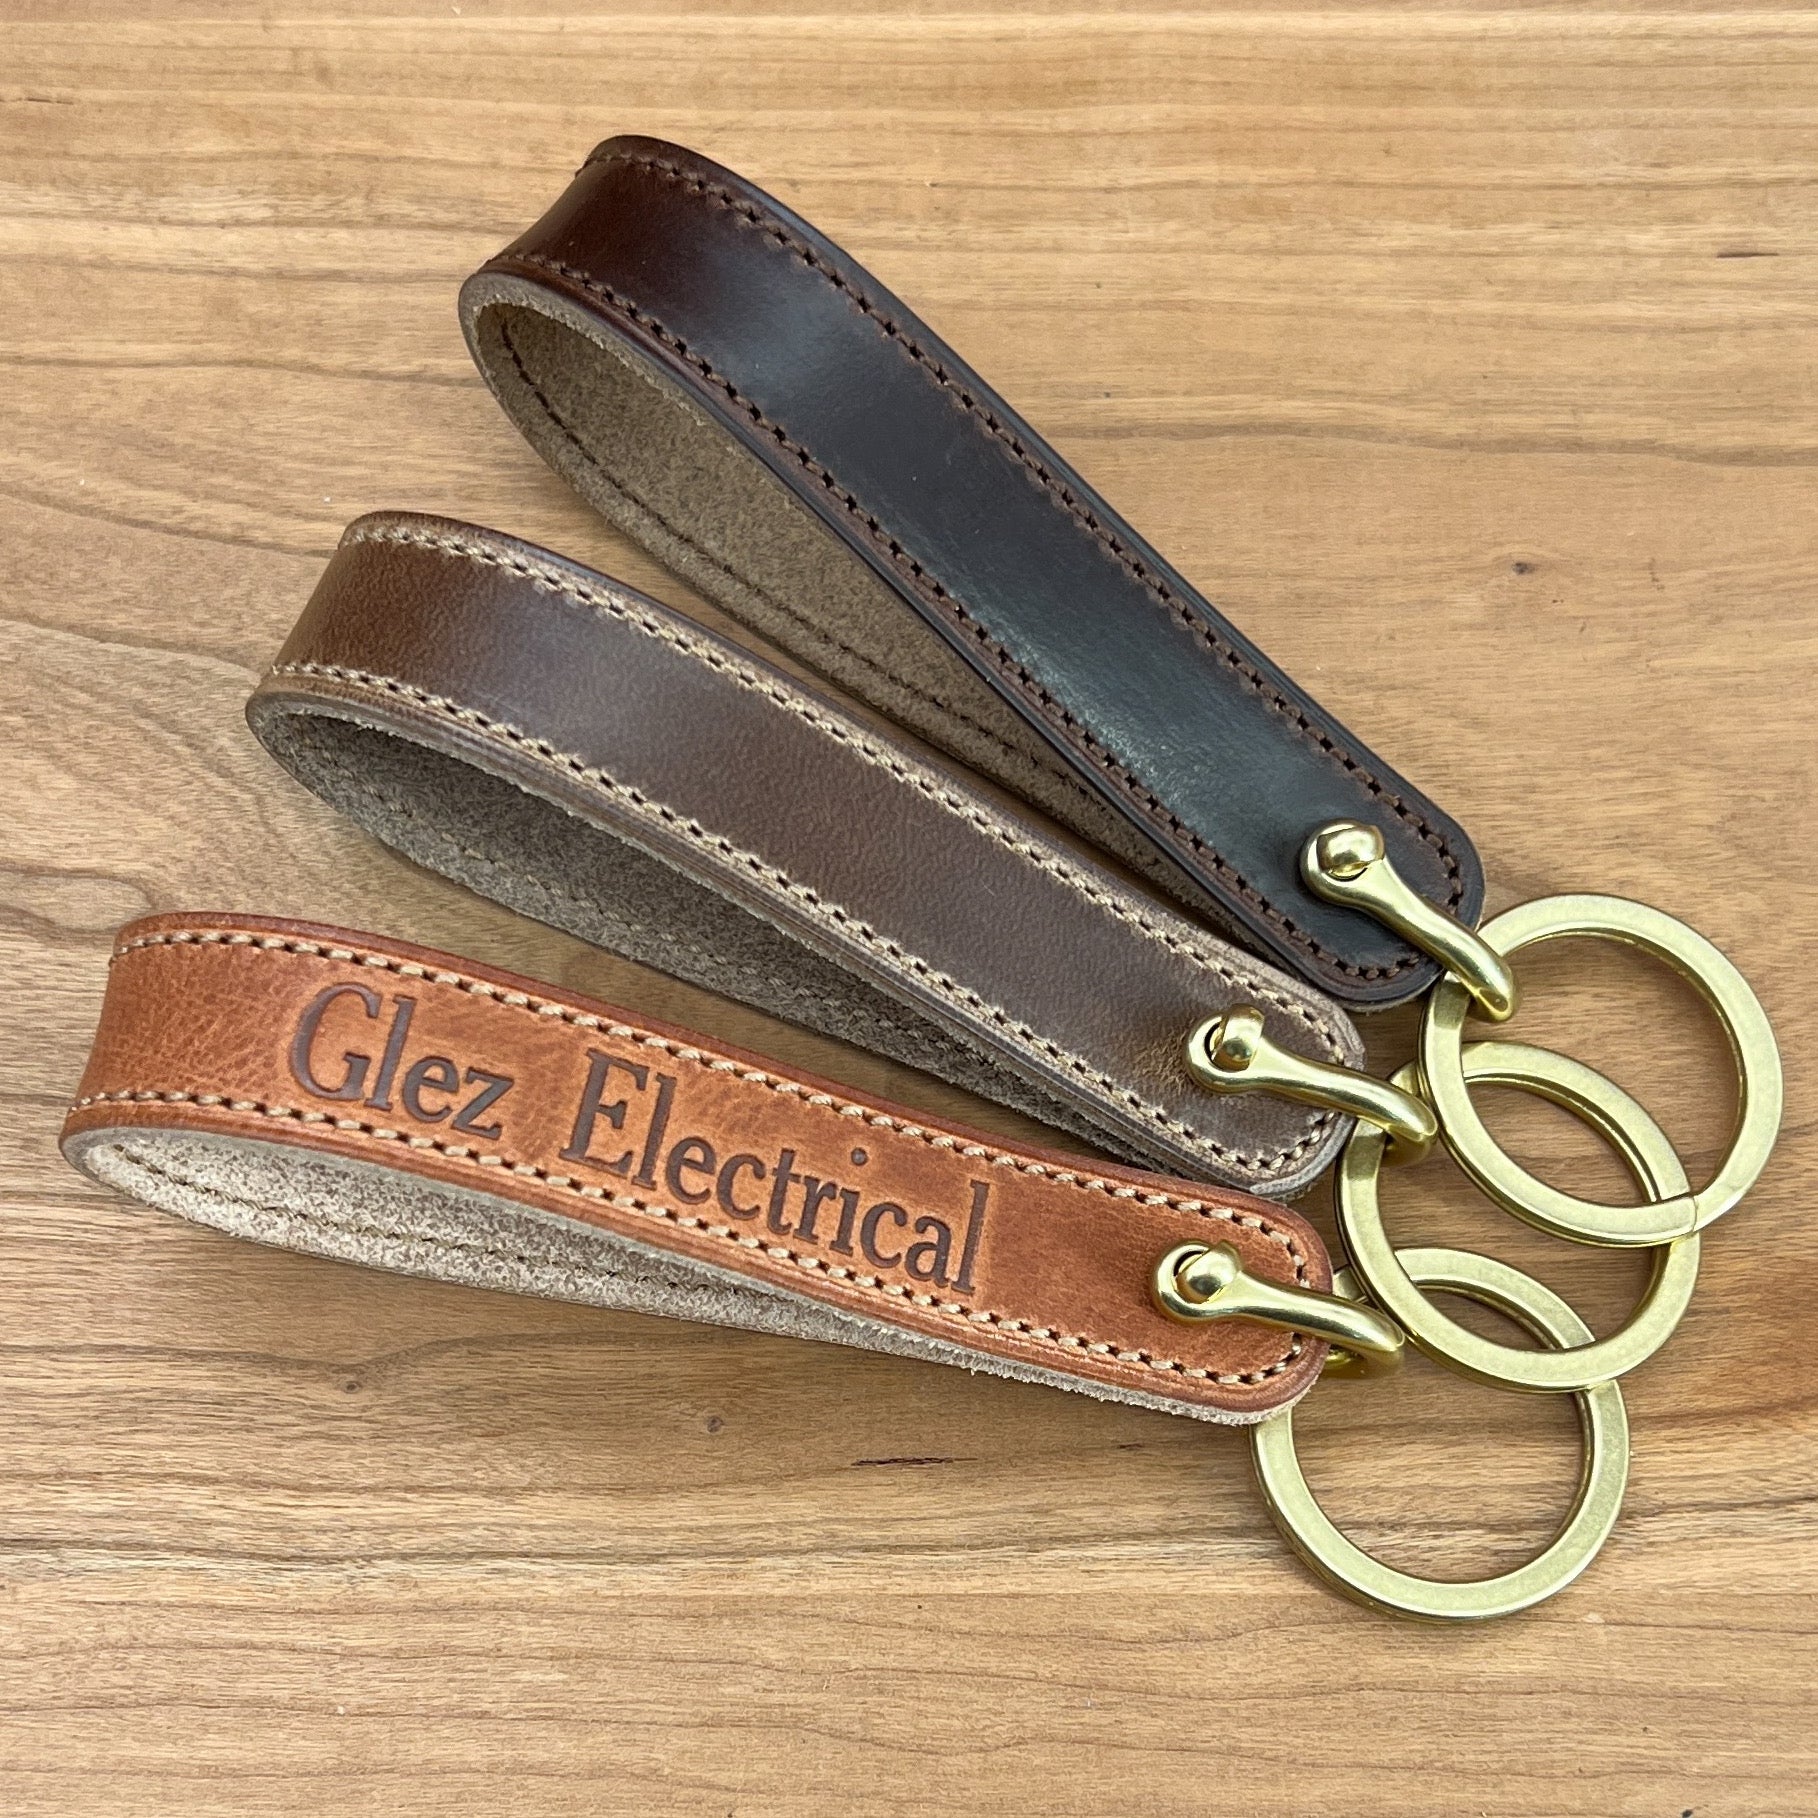 CustomLeatherAndPen Horween Leather Belt Loop Keychain | Handmade to Order in Houston, TX Brass